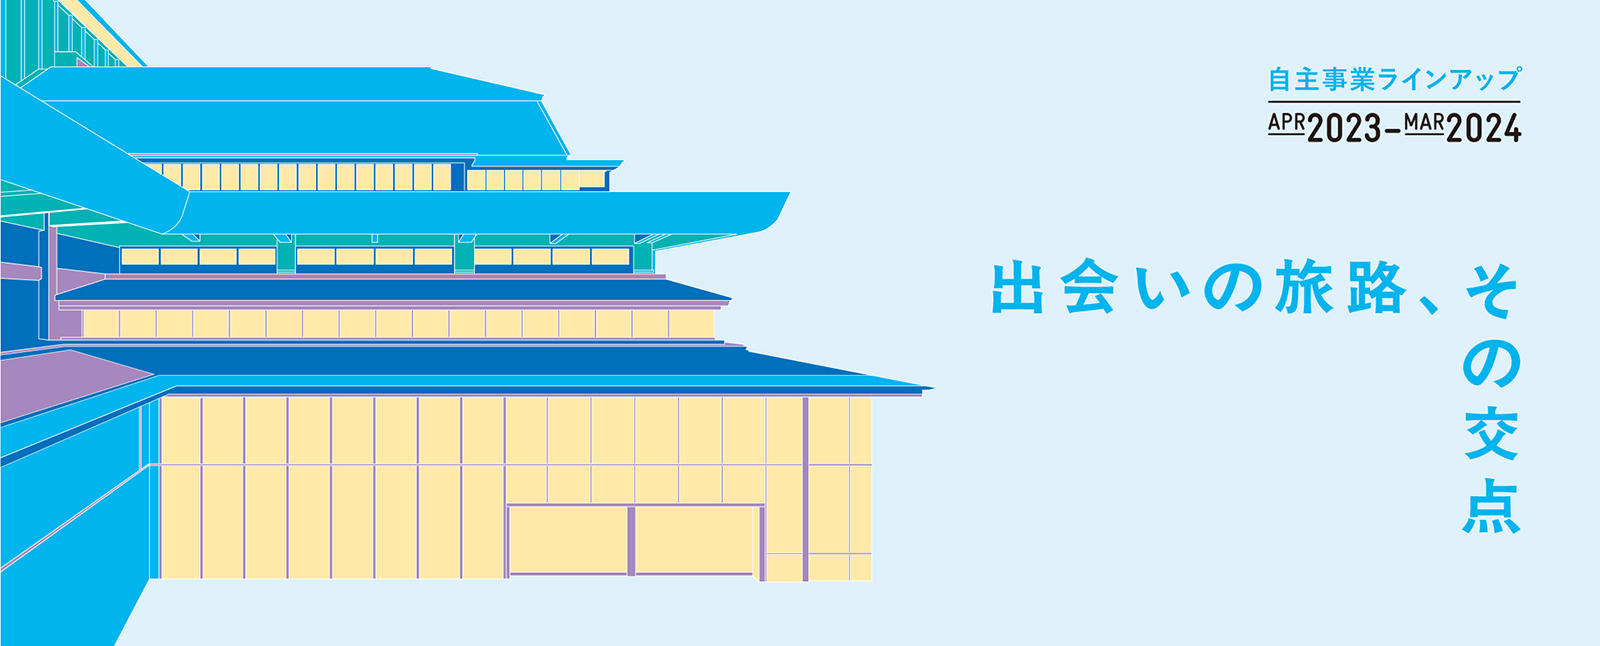 ROHM Theatre Kyoto Program 2023 Lineup